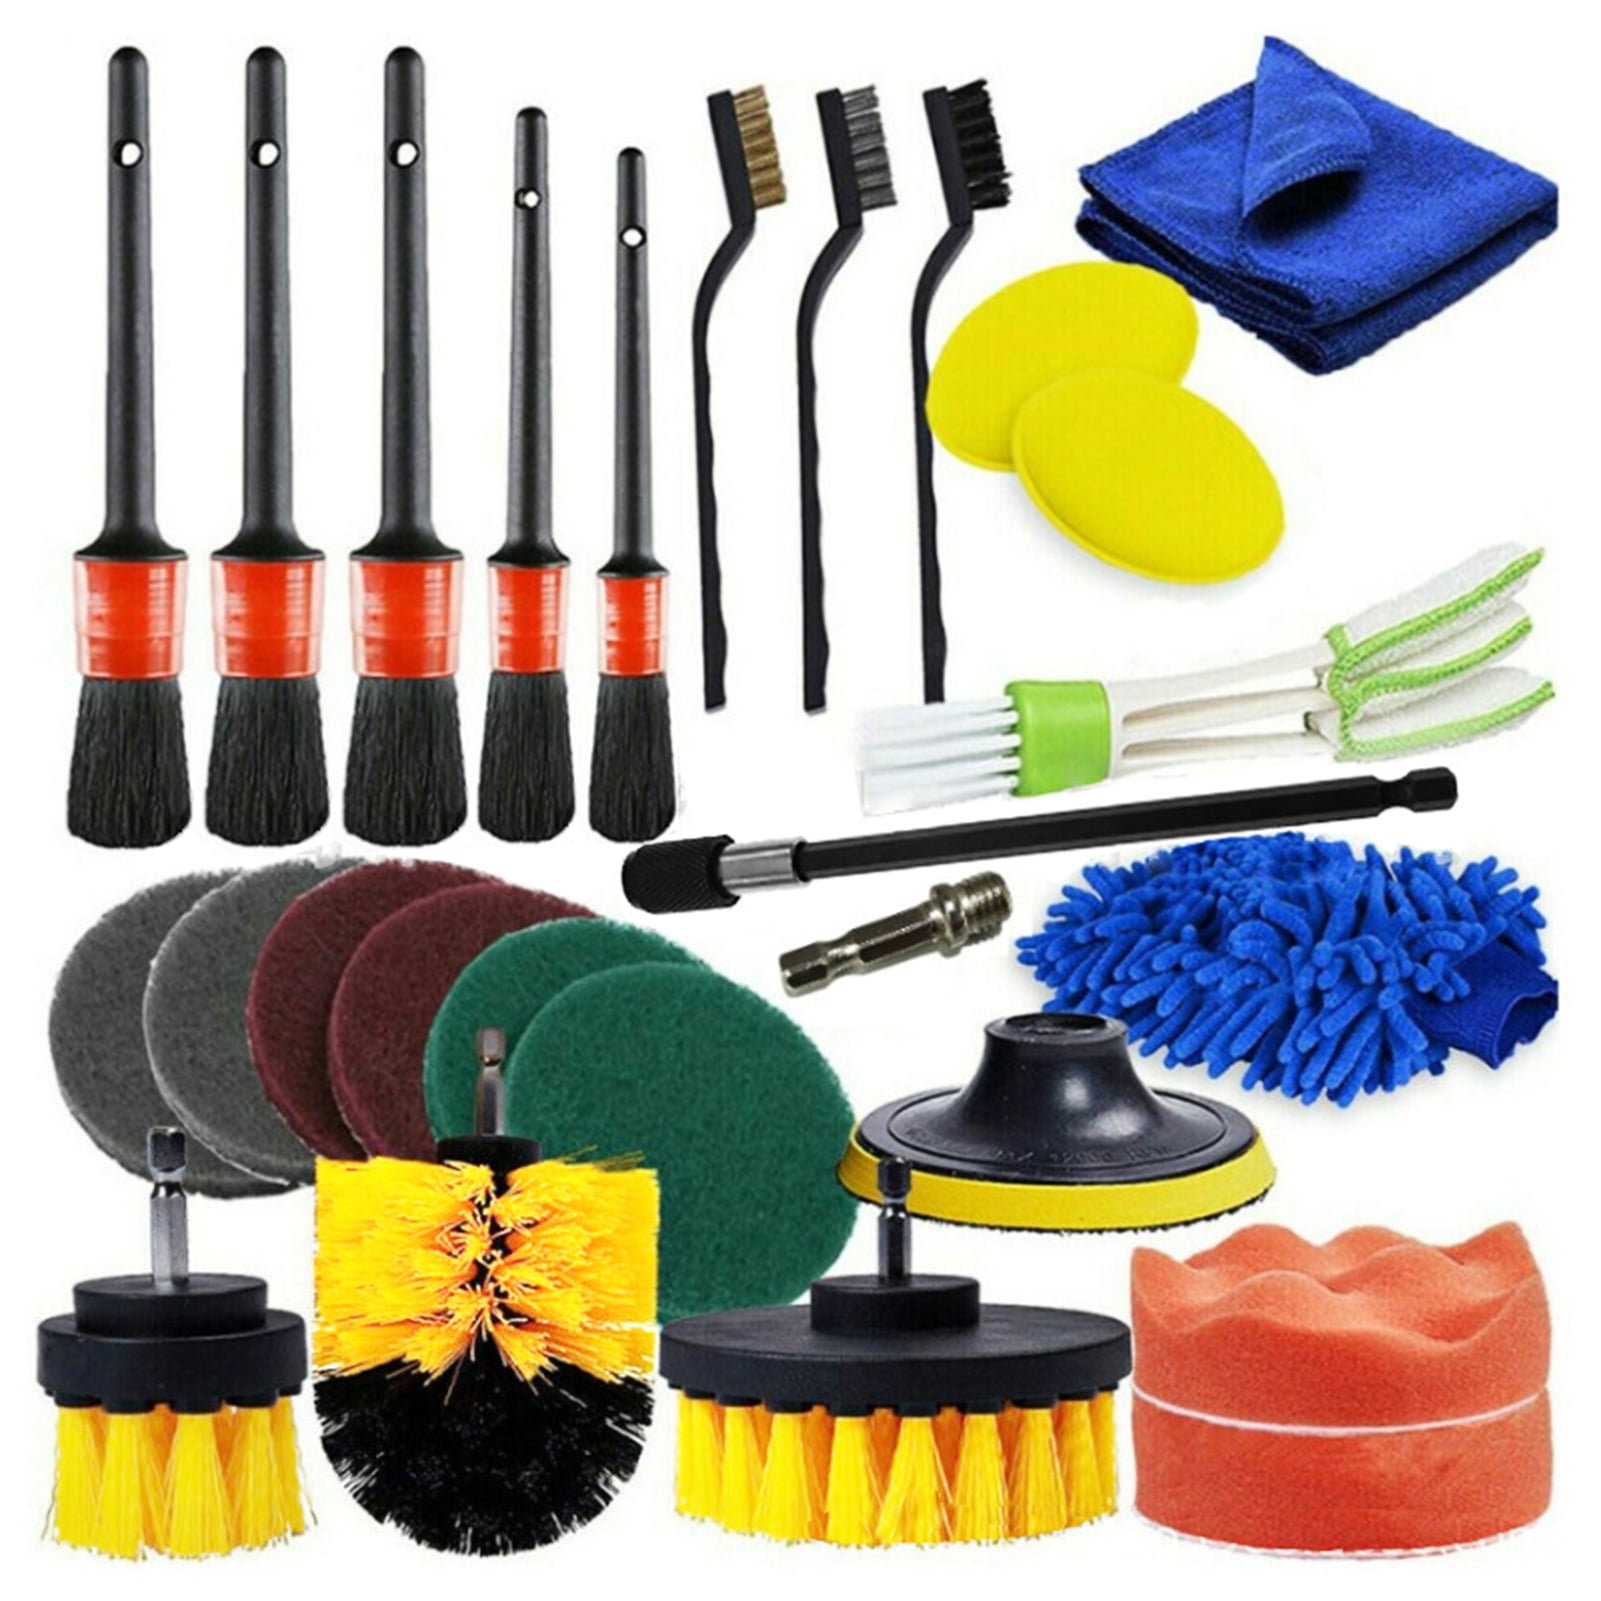 20 Car Cleaning Kit With Car Rim Brush, Drill Brush, Microfiber Glove, Car  Microfiber Cloth, Metal Brush Car Interior Cleaning, Polishing Pad, Venetia